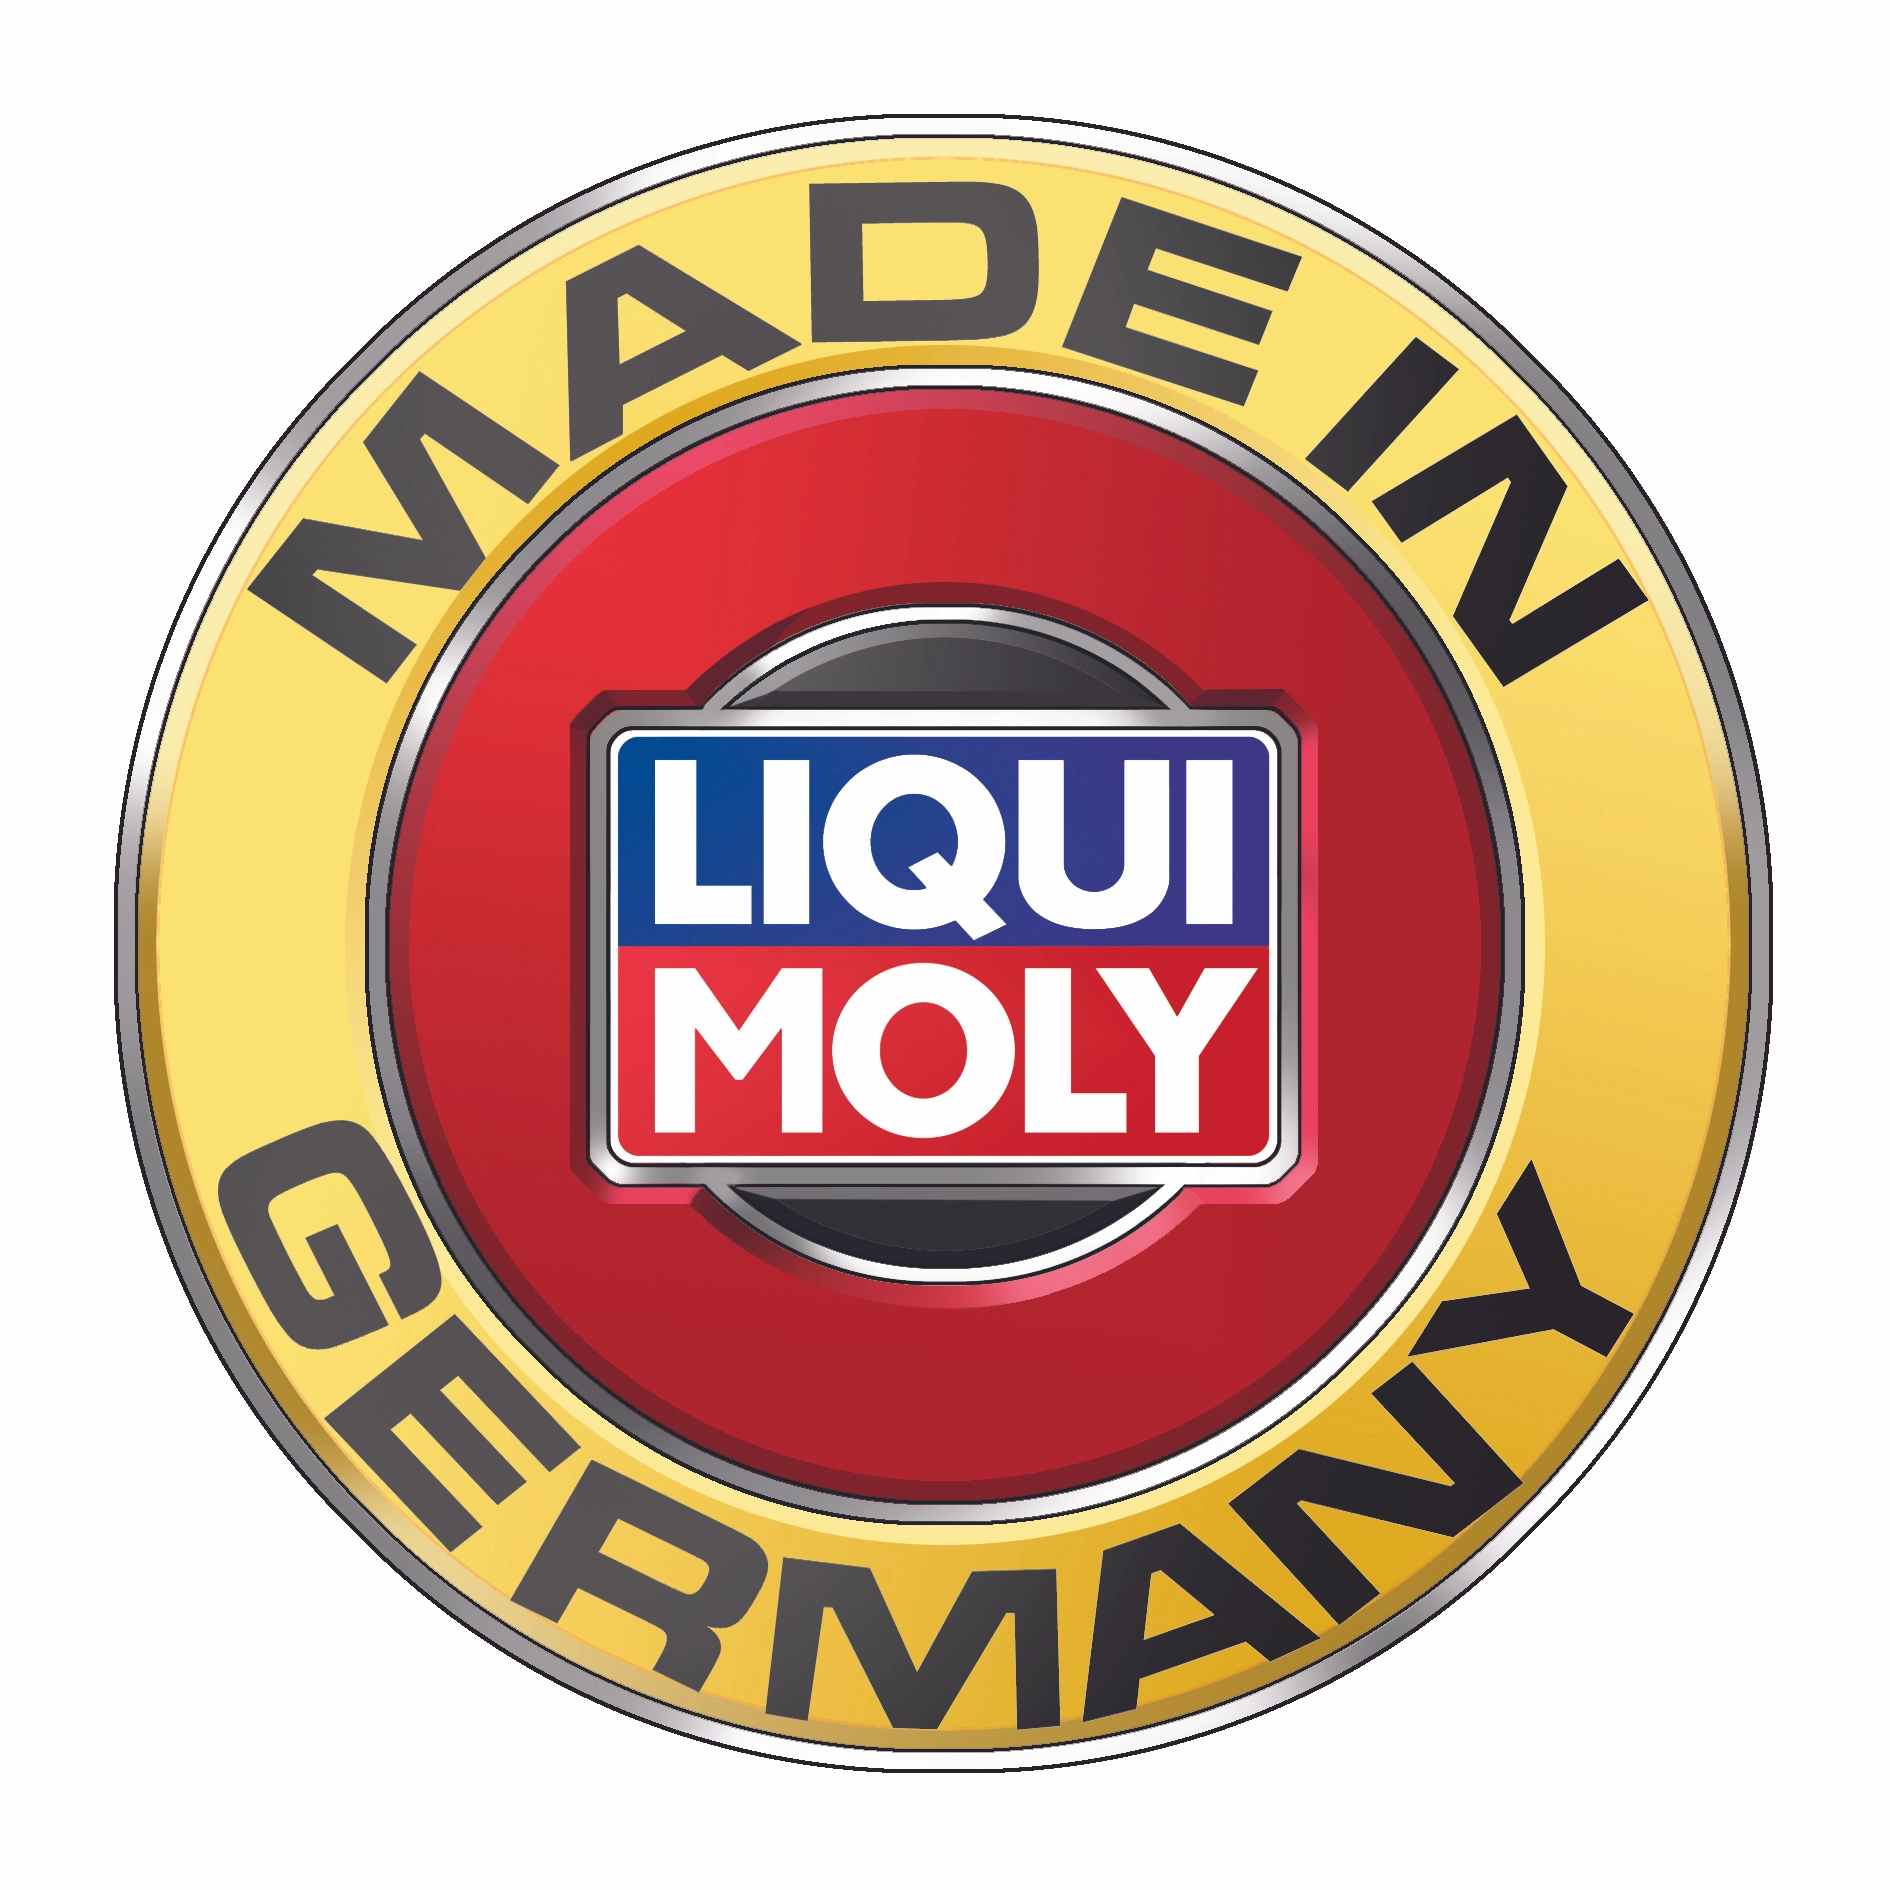 Liqui Moly Hydro-Stößel-Additiv 300 ml kaufen bei OBI